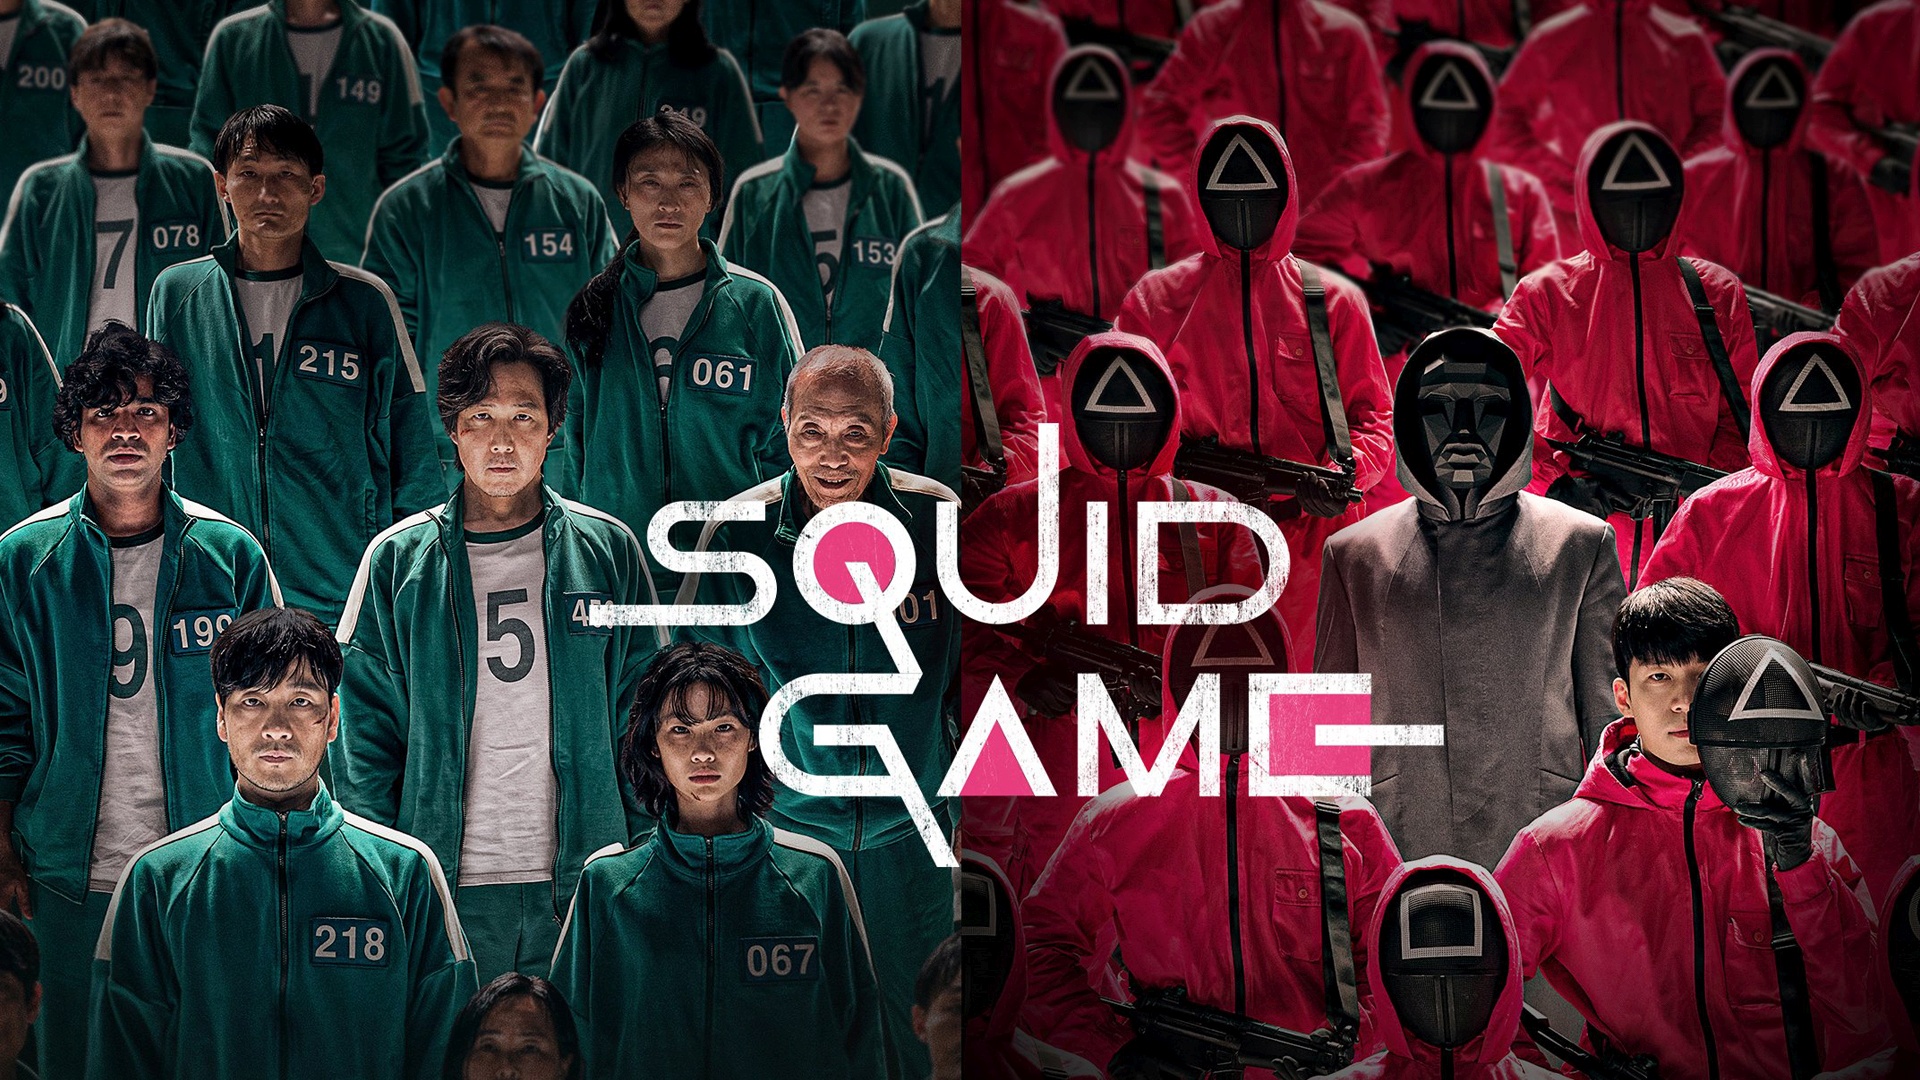 Squid Game Background